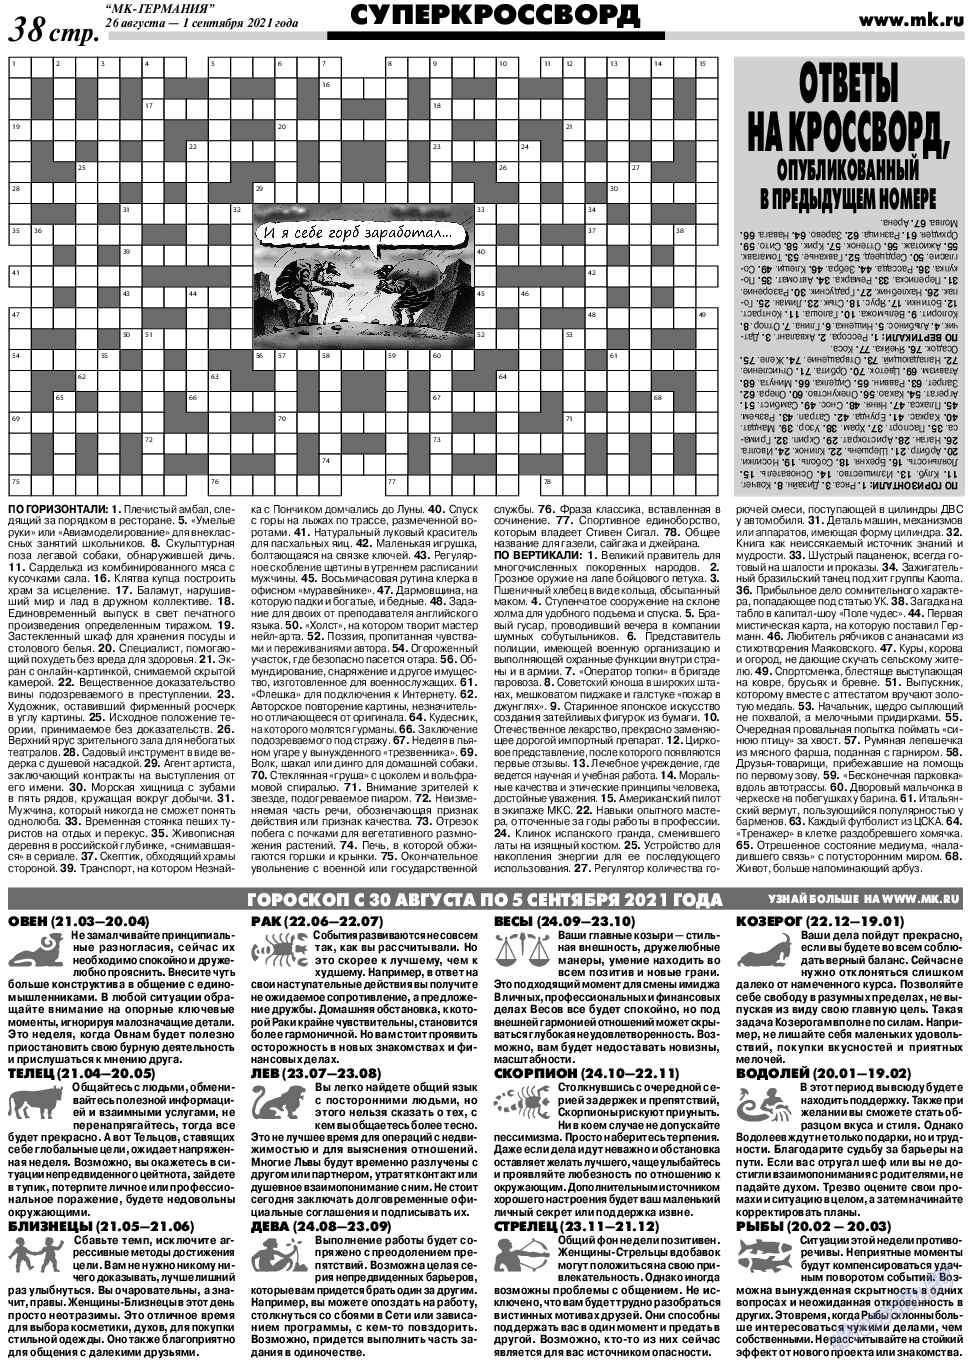 МК-Германия, газета. 2021 №35 стр.38